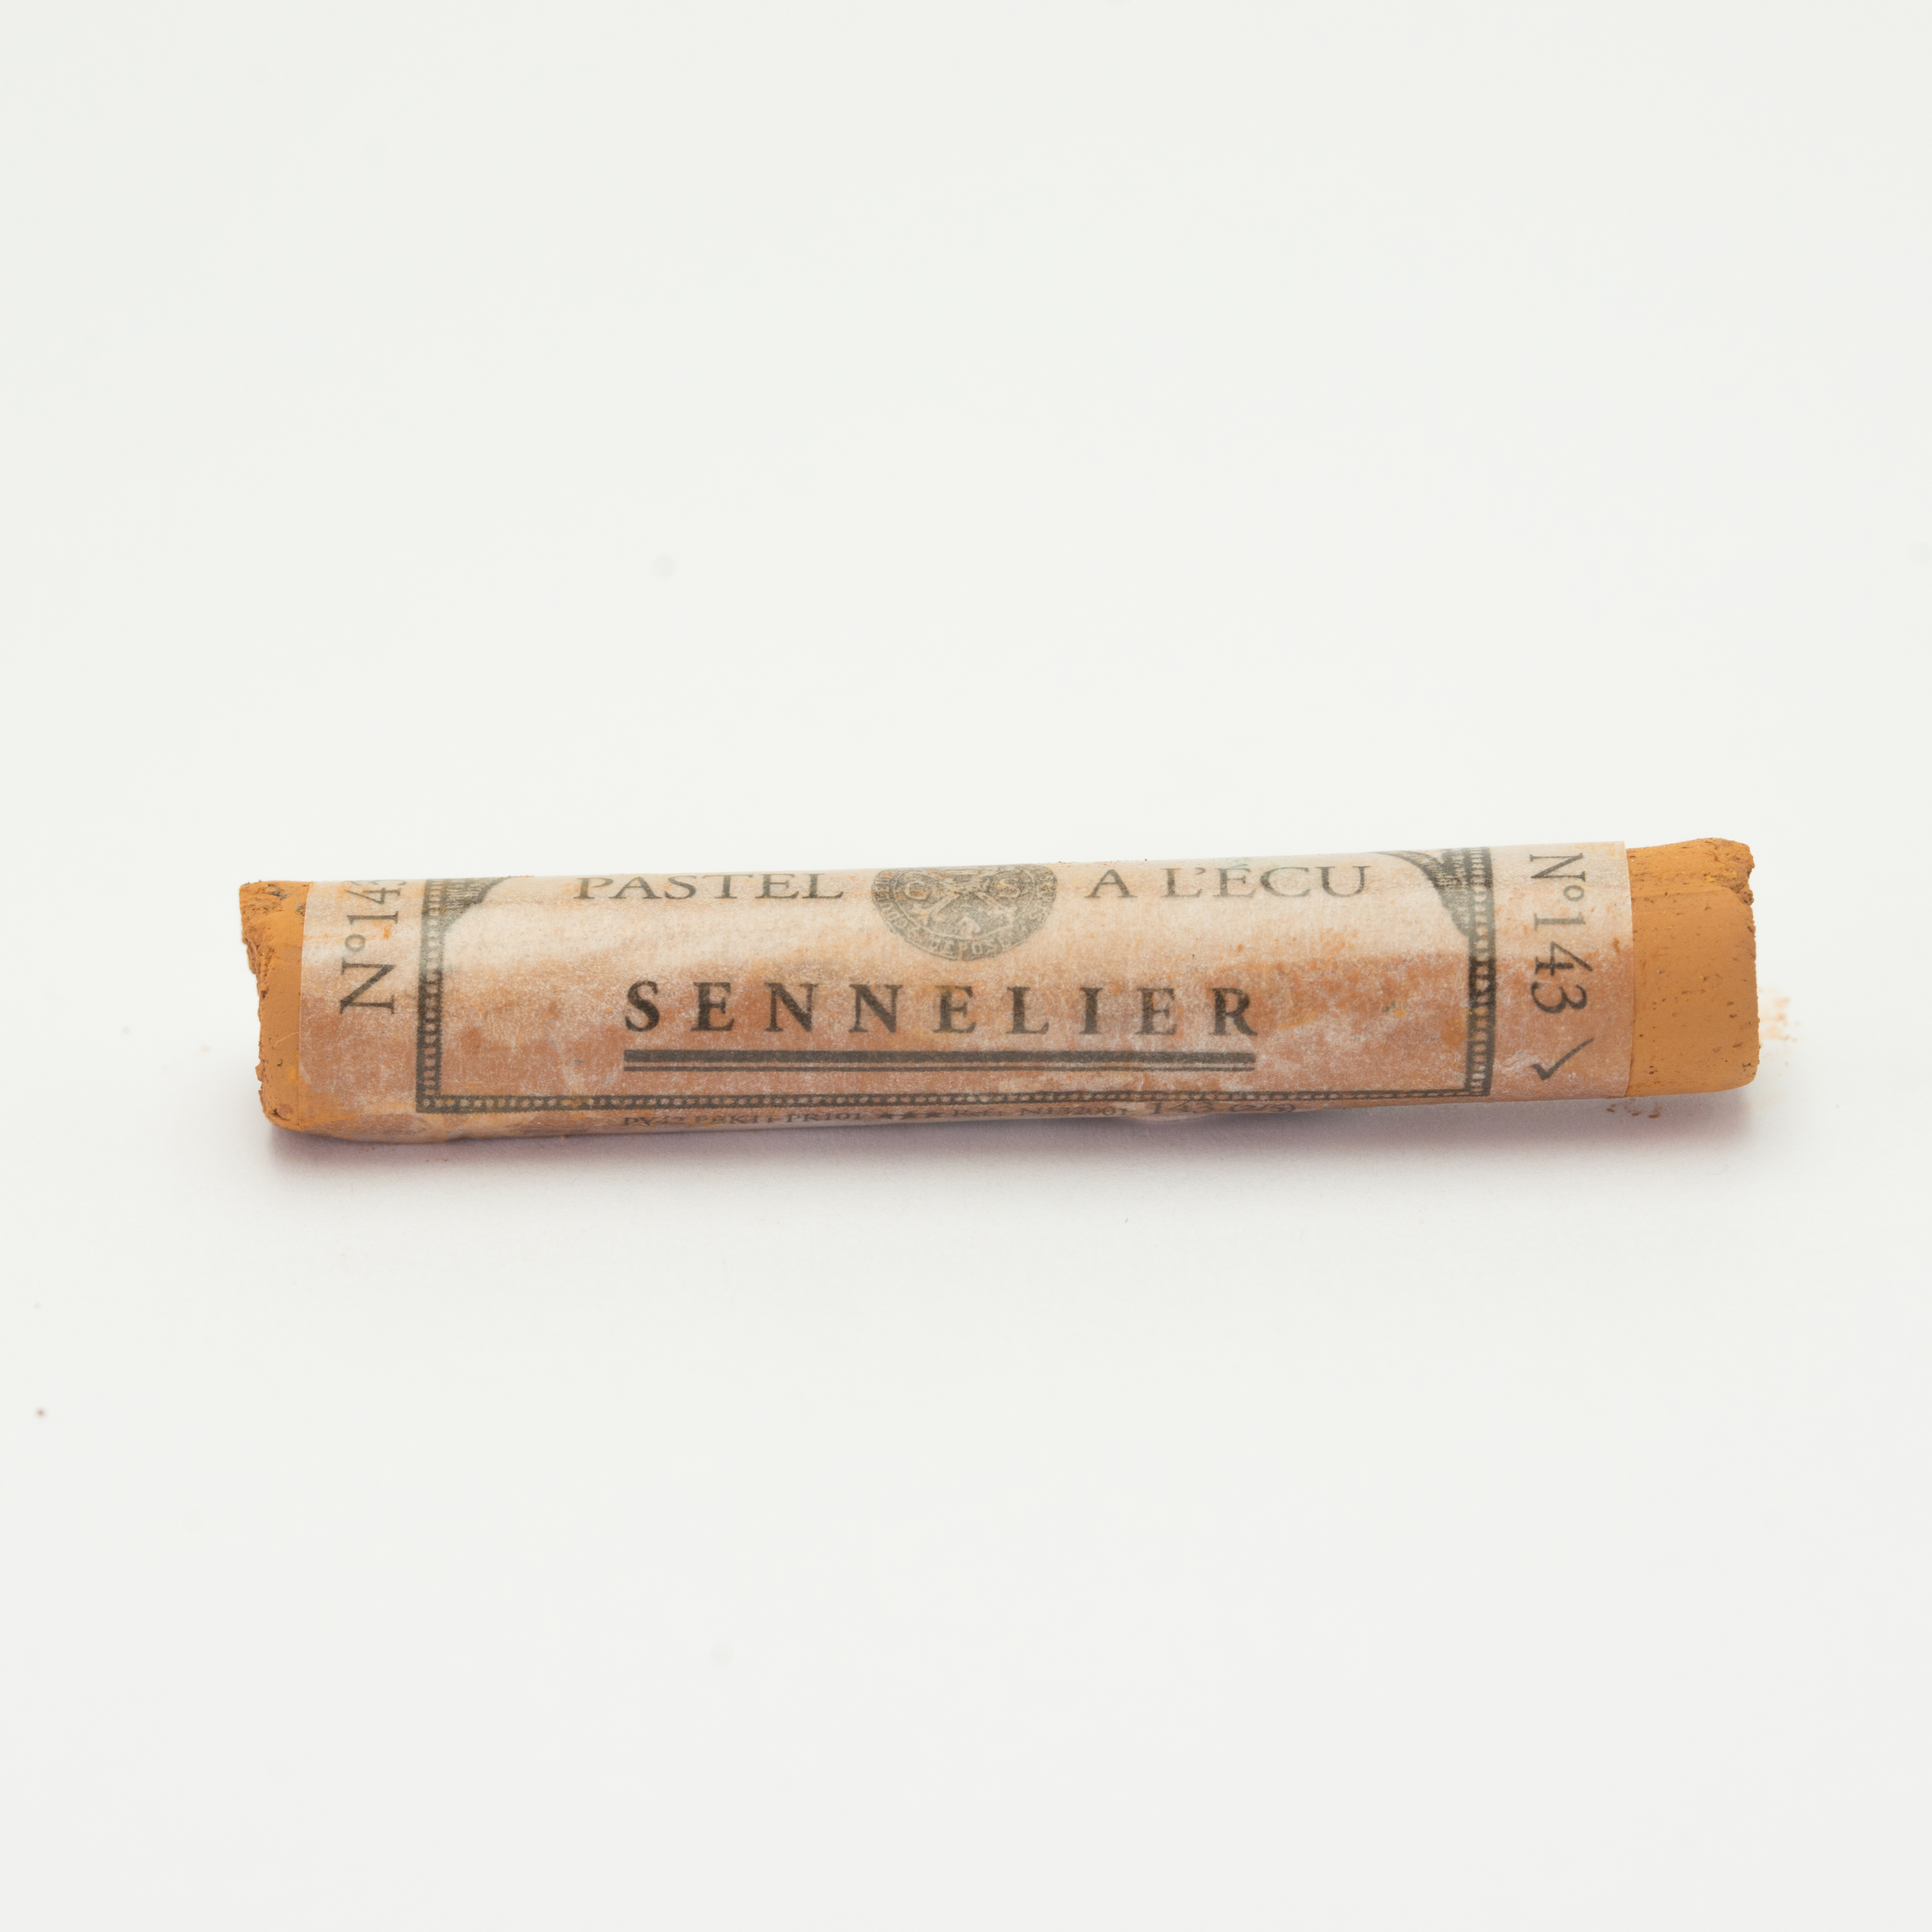 Sennelier Extra Soft Pastels - Dead Leaf Green 143